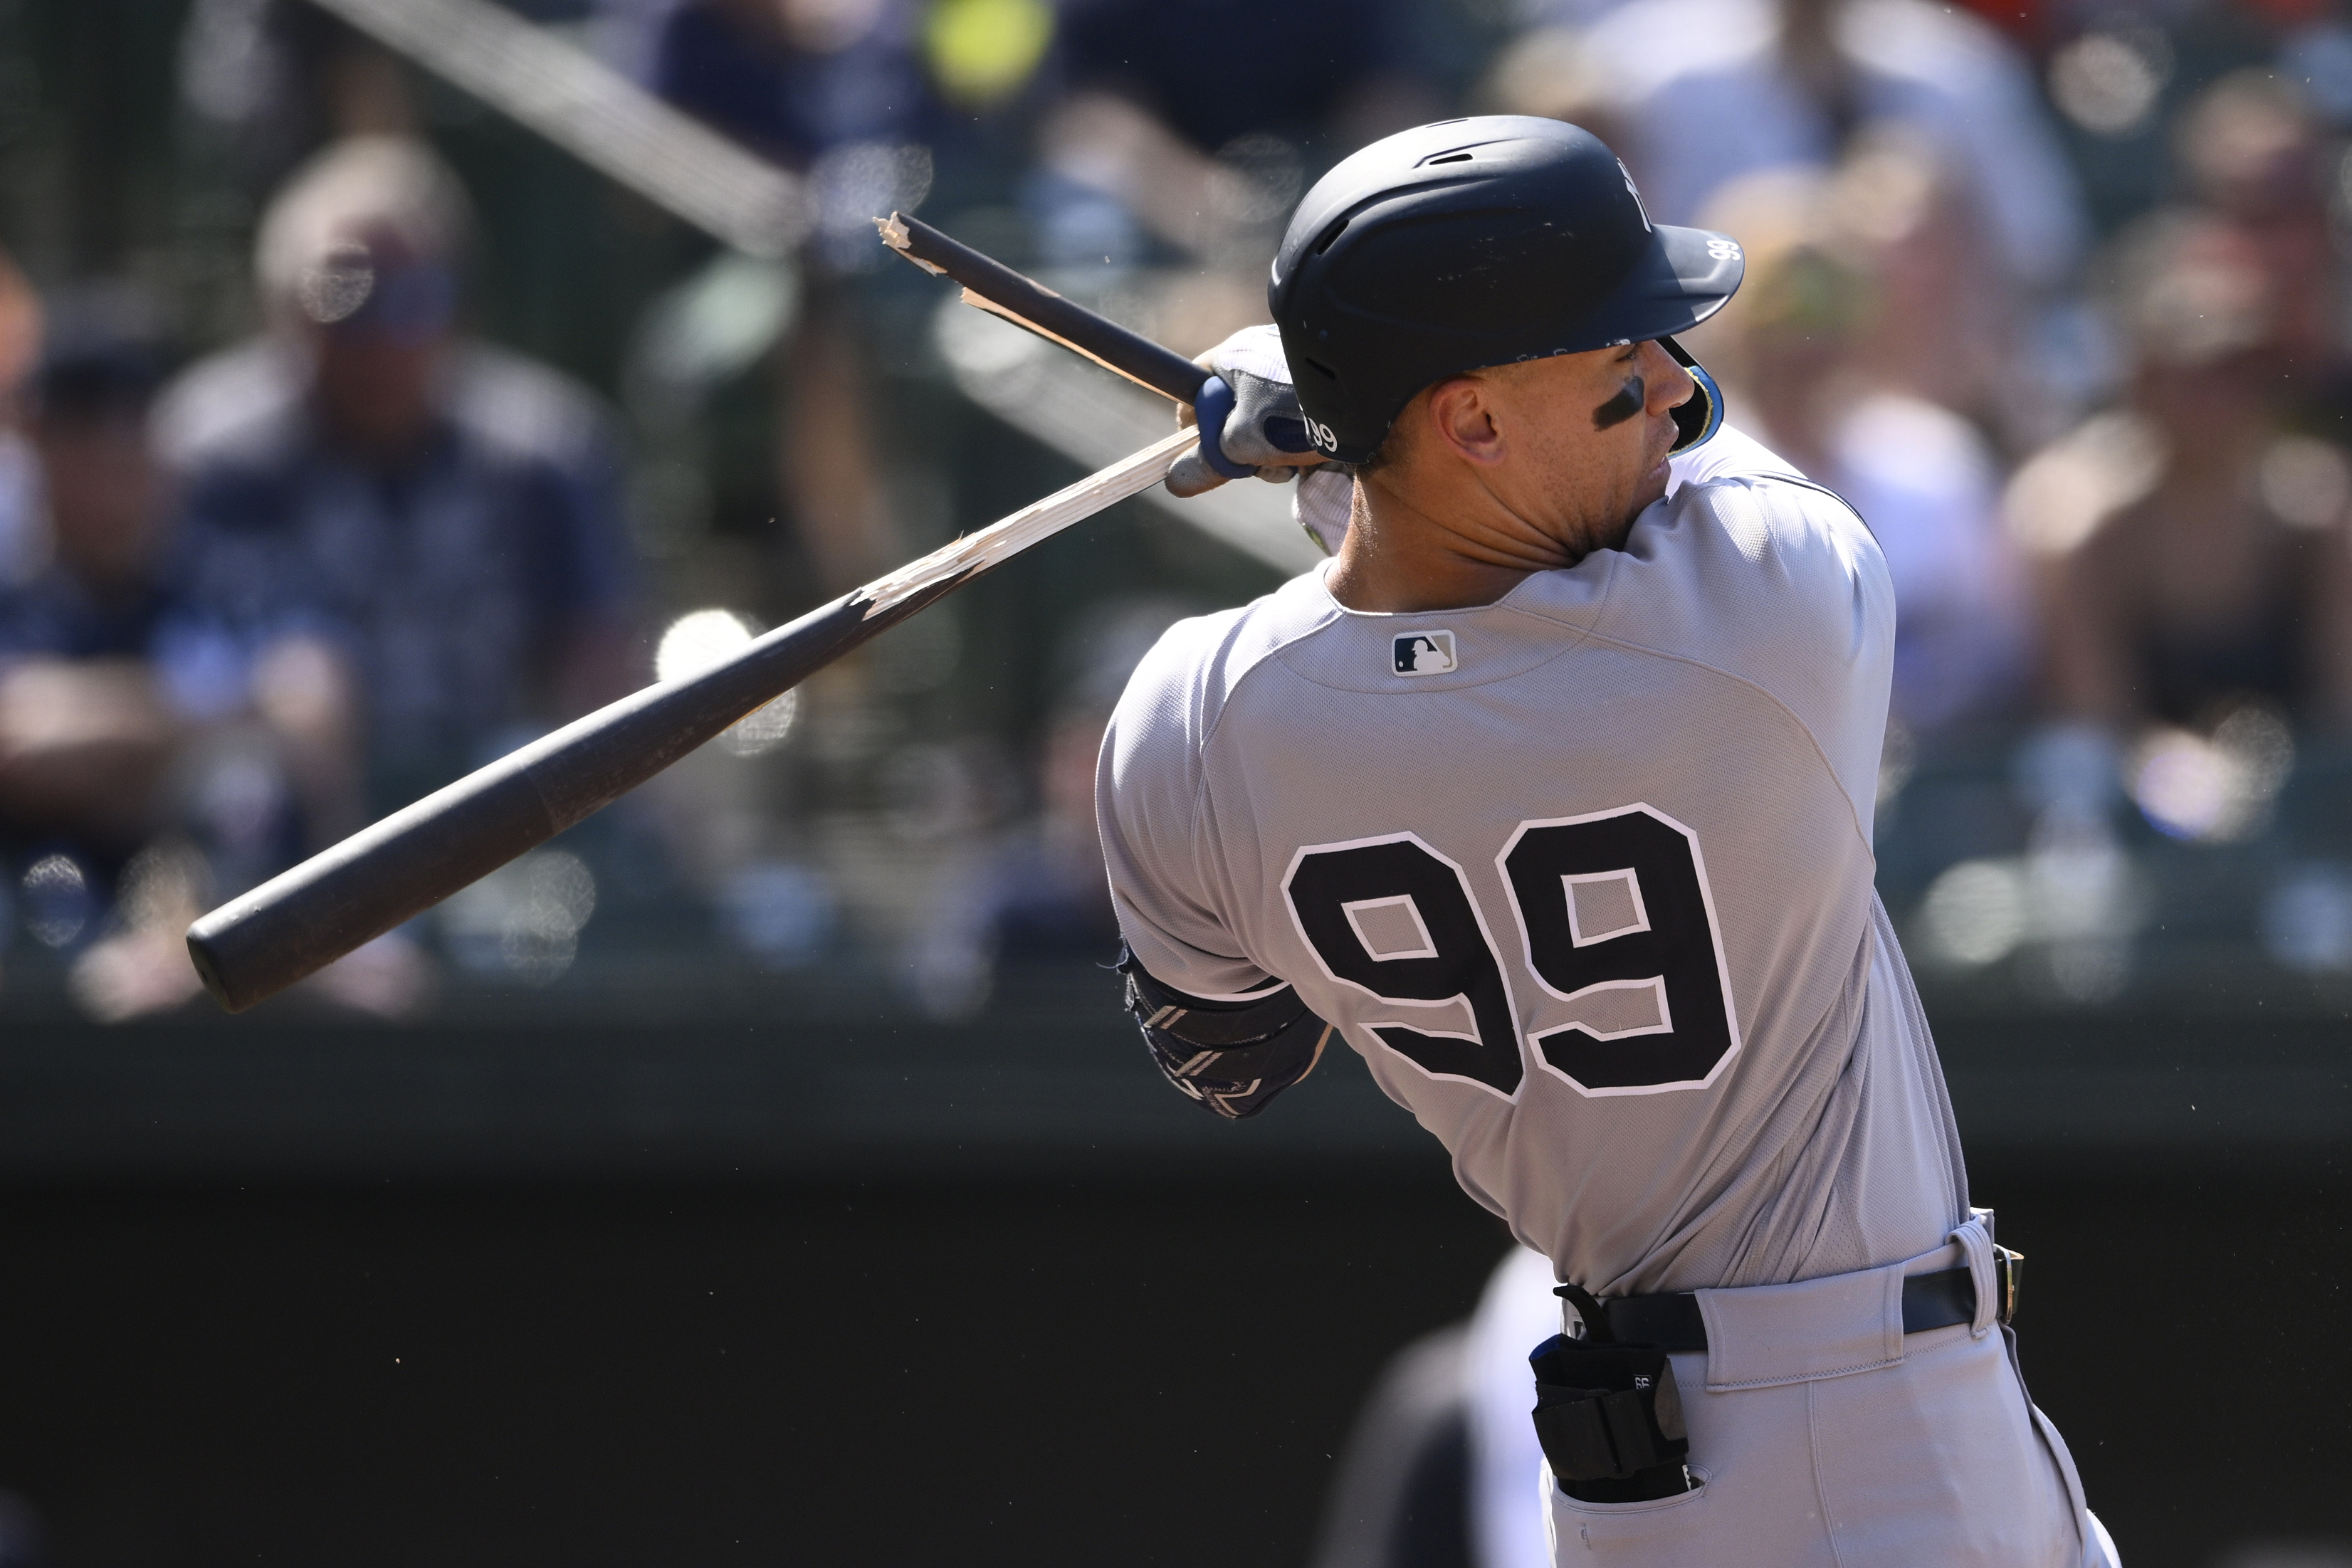 Yankees At-Bat of the Week: Aaron Judge's big double in Cincinnati